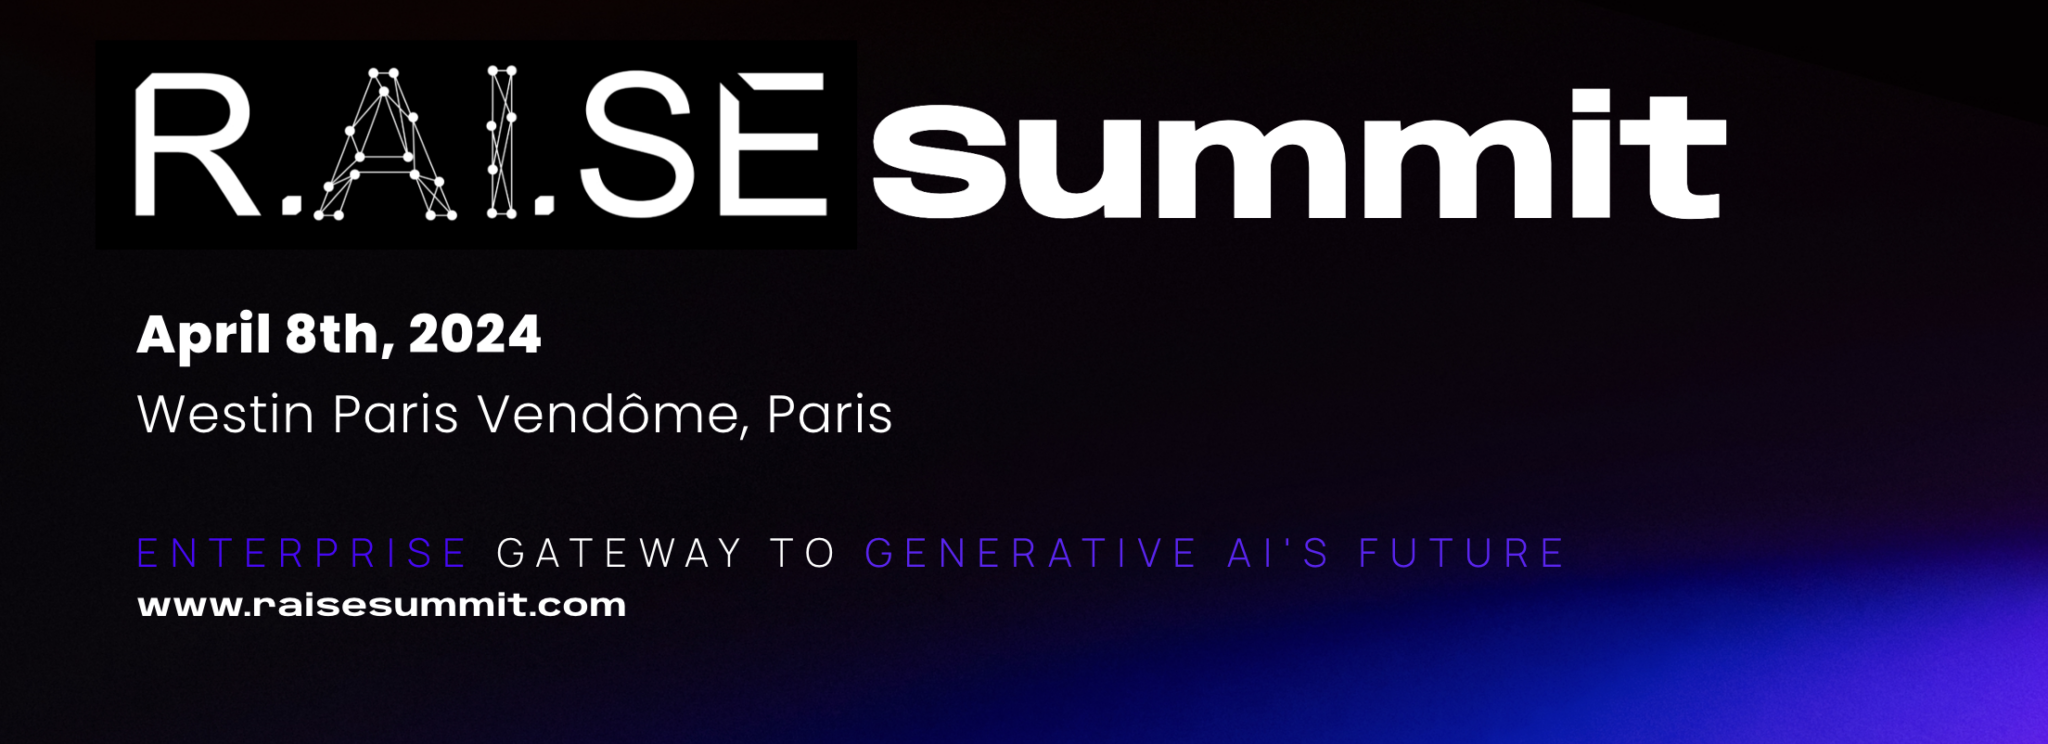 Press Release of The R.AI.SE Summit April 8th, 2024, Westin Paris Vendôme - CryptoCurrencyWire